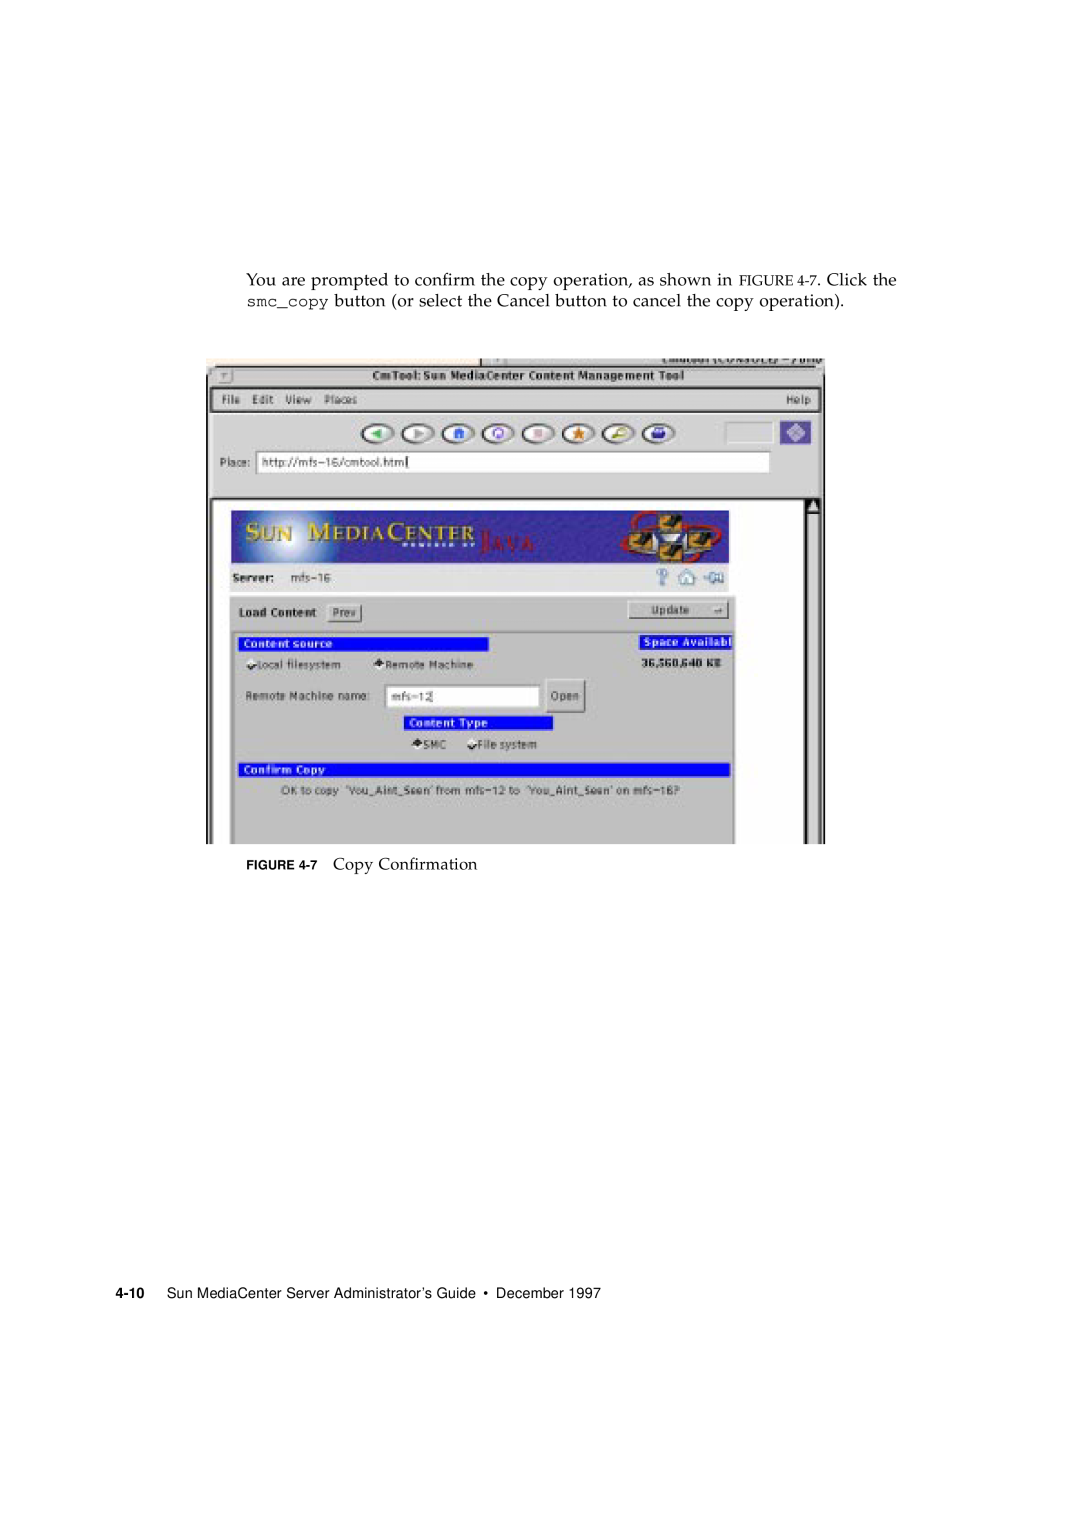 Sun Microsystems 2.1 manual 7 Copy Conﬁrmation, Sun MediaCenter Server Administrator’s Guide December 